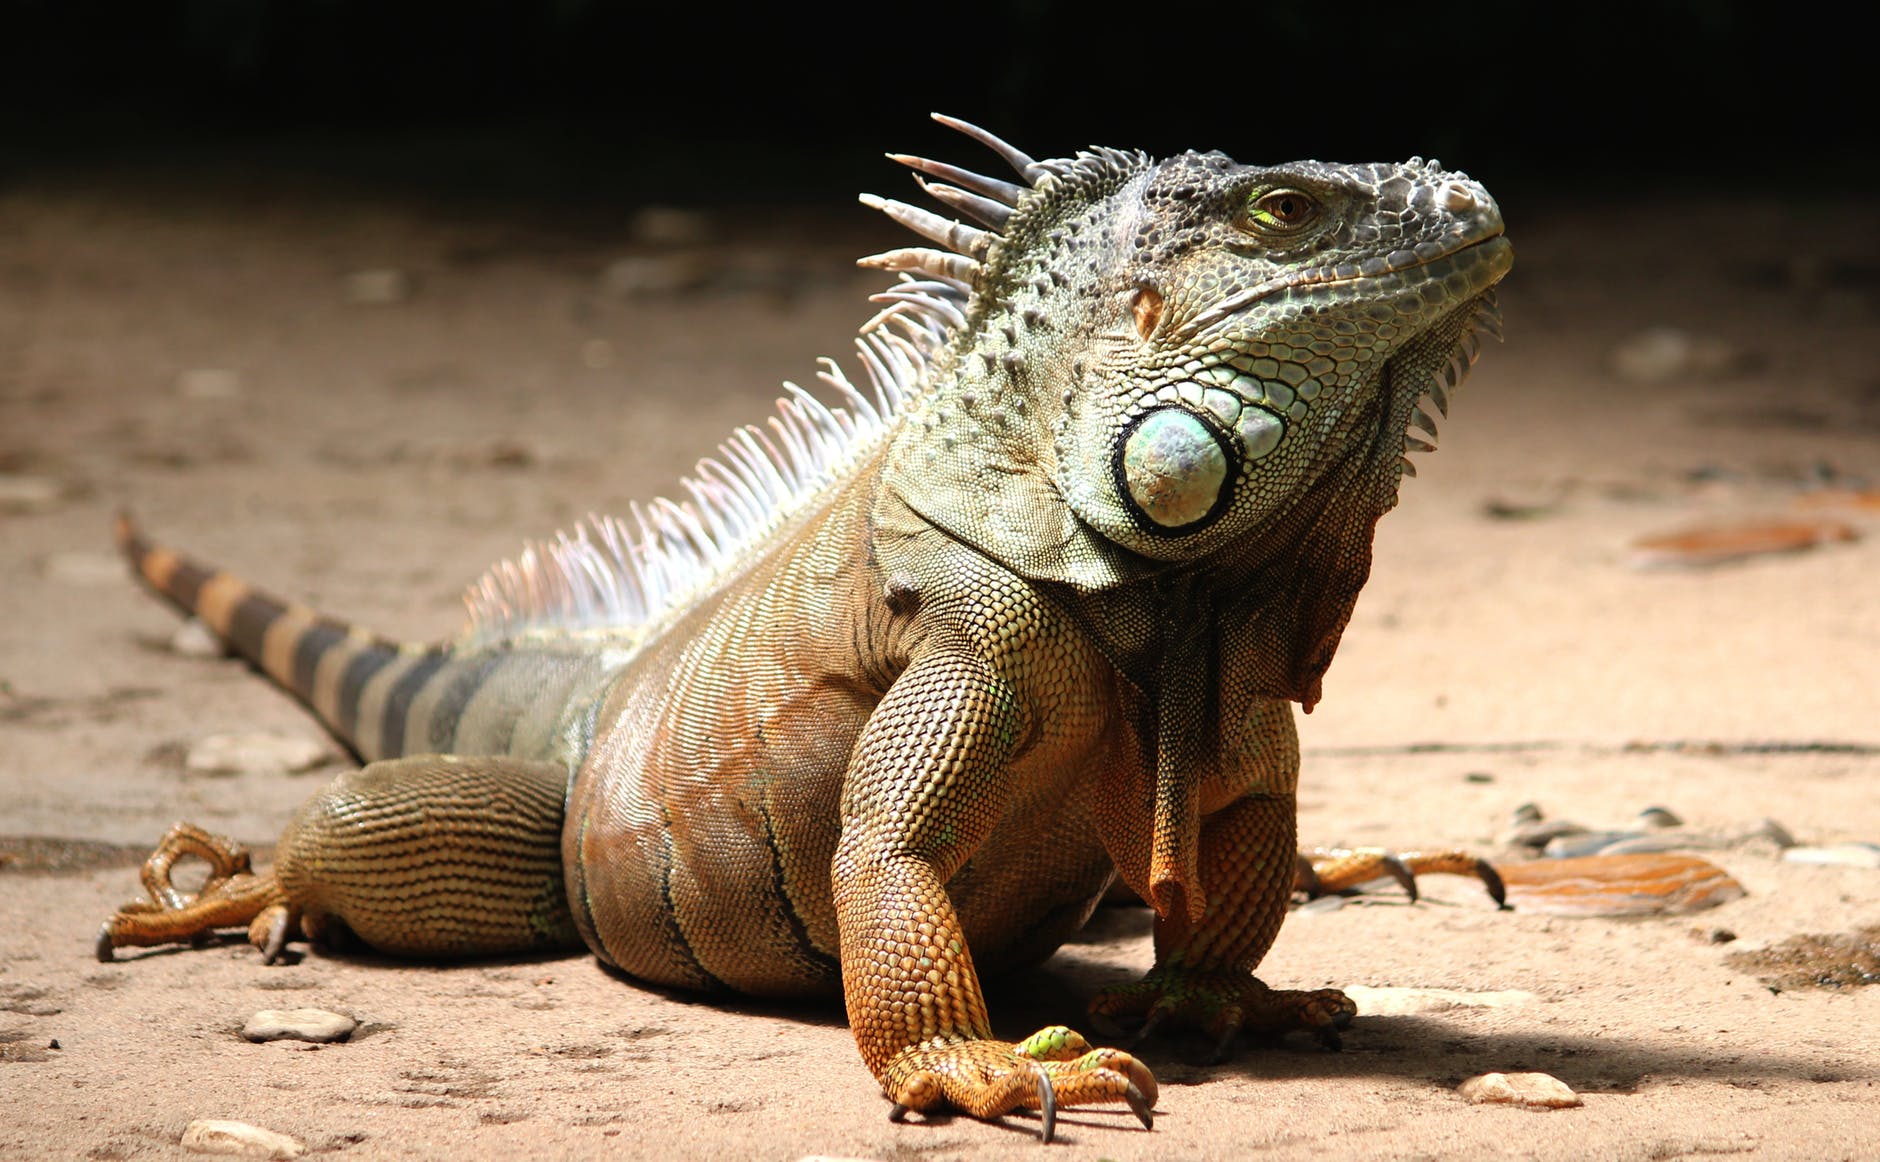 close up of a iguana